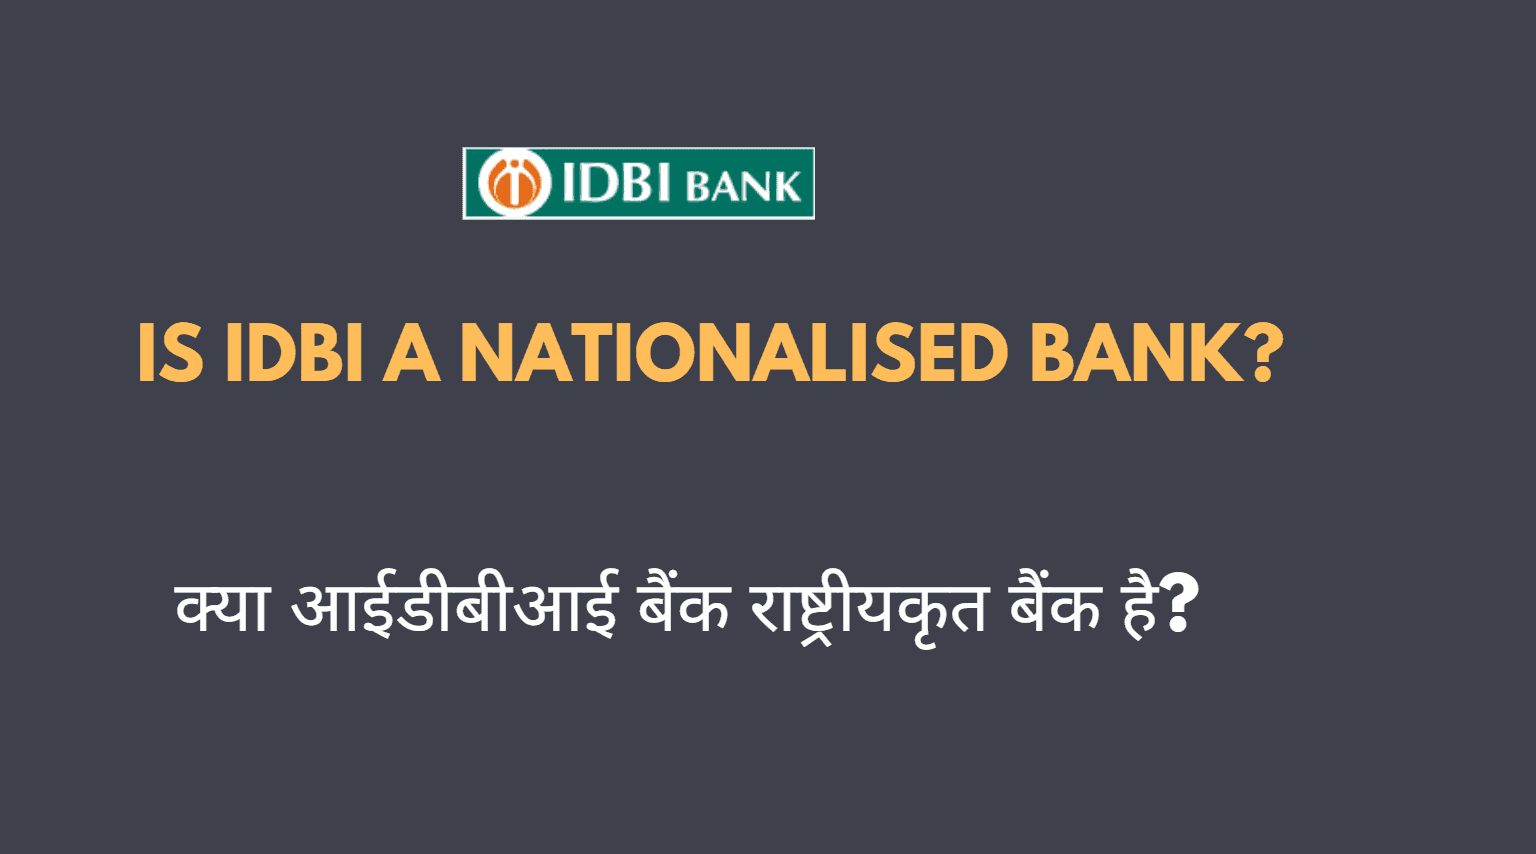 Is IDBI a Nationalised Bank?